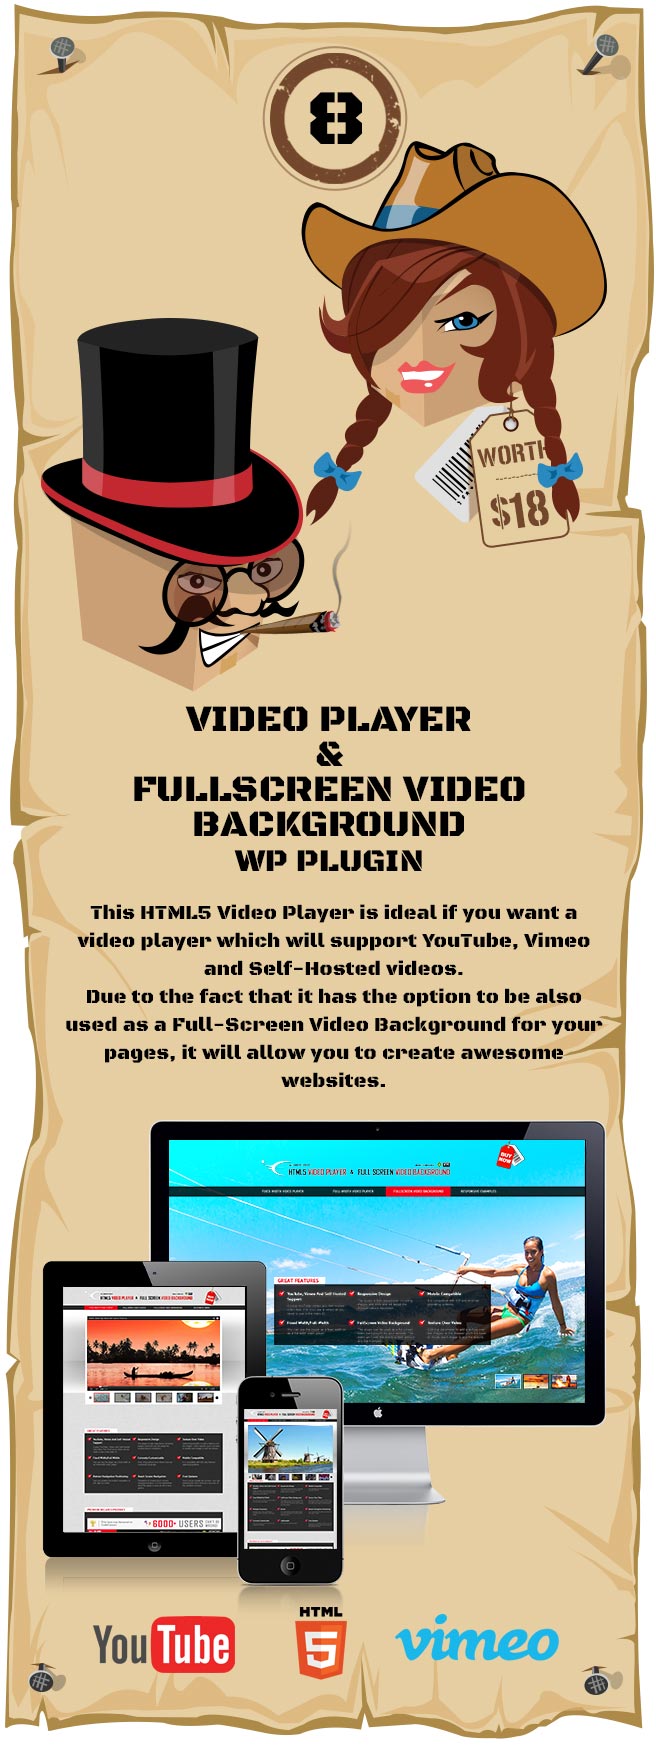 Full Screen Video Player & Video Wallpaper - WP Plugin